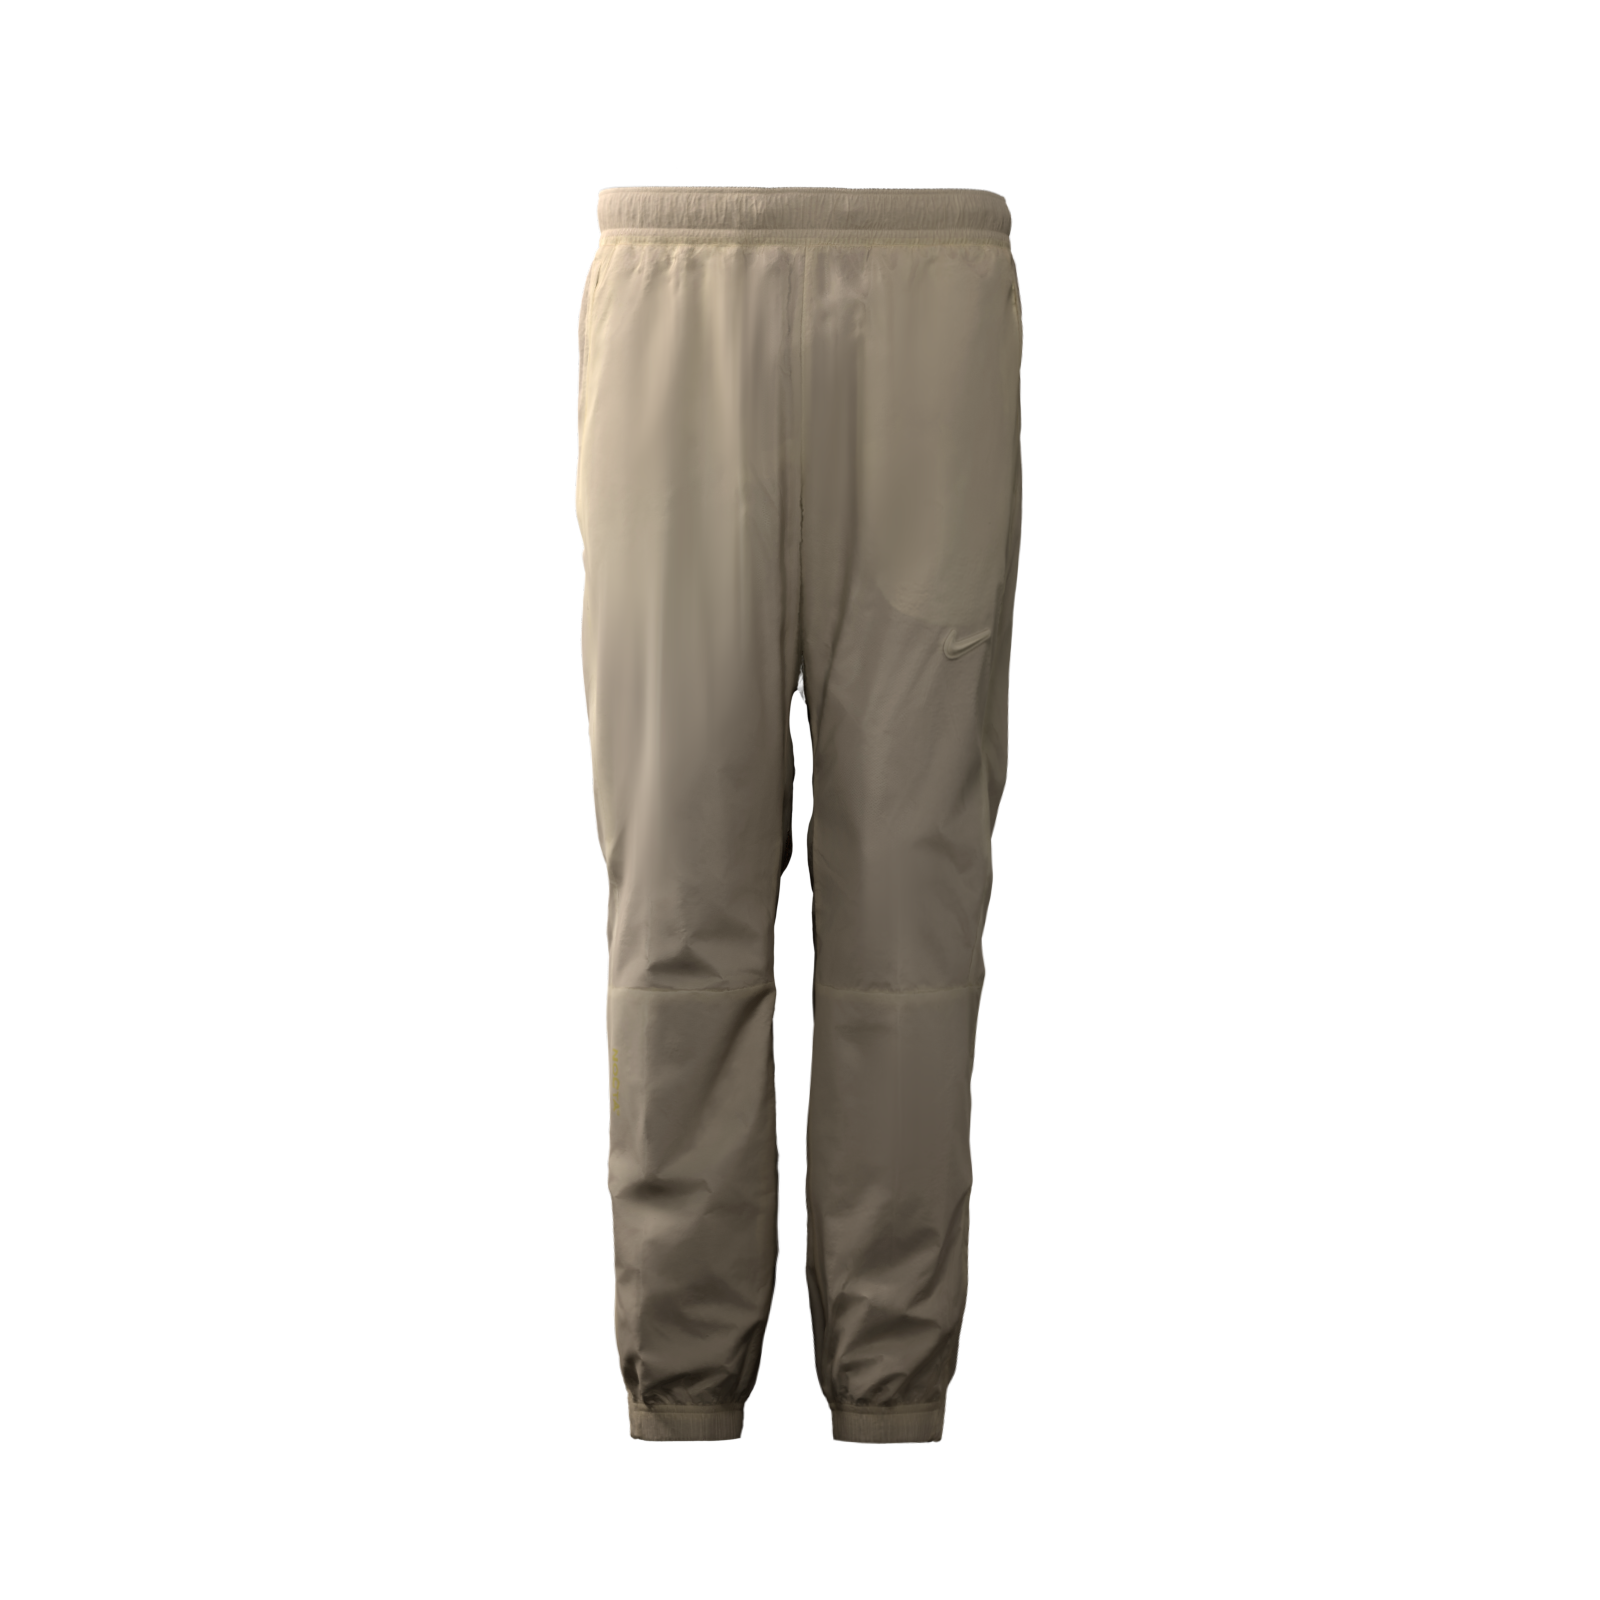 Grails SF Nylon Pants Grey